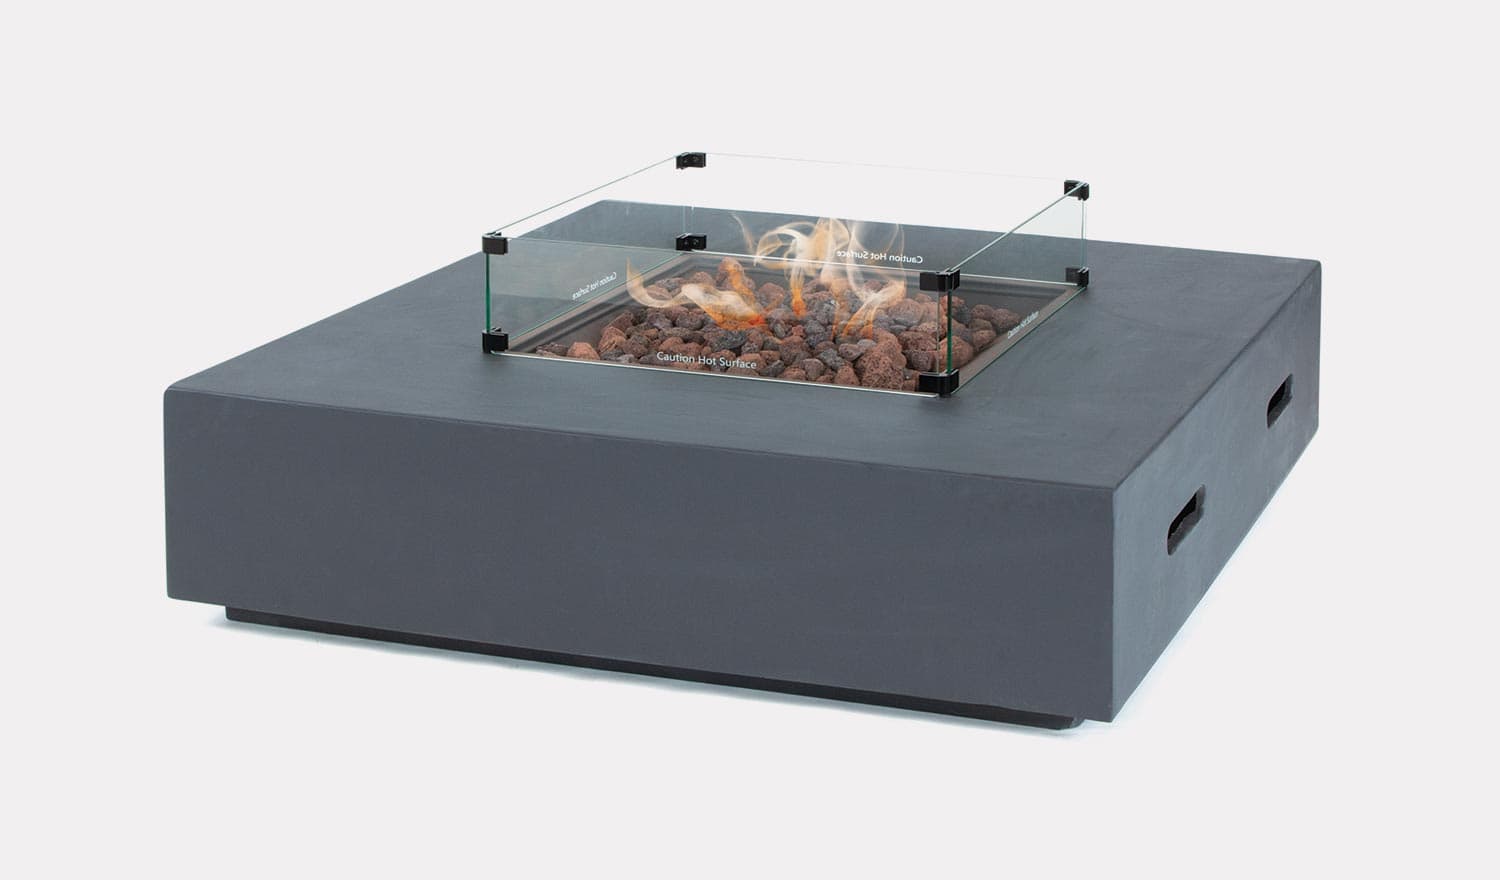 Universal Fire Pit Coffee Table 105cm, Rectangular Fire Pit Coffee Table